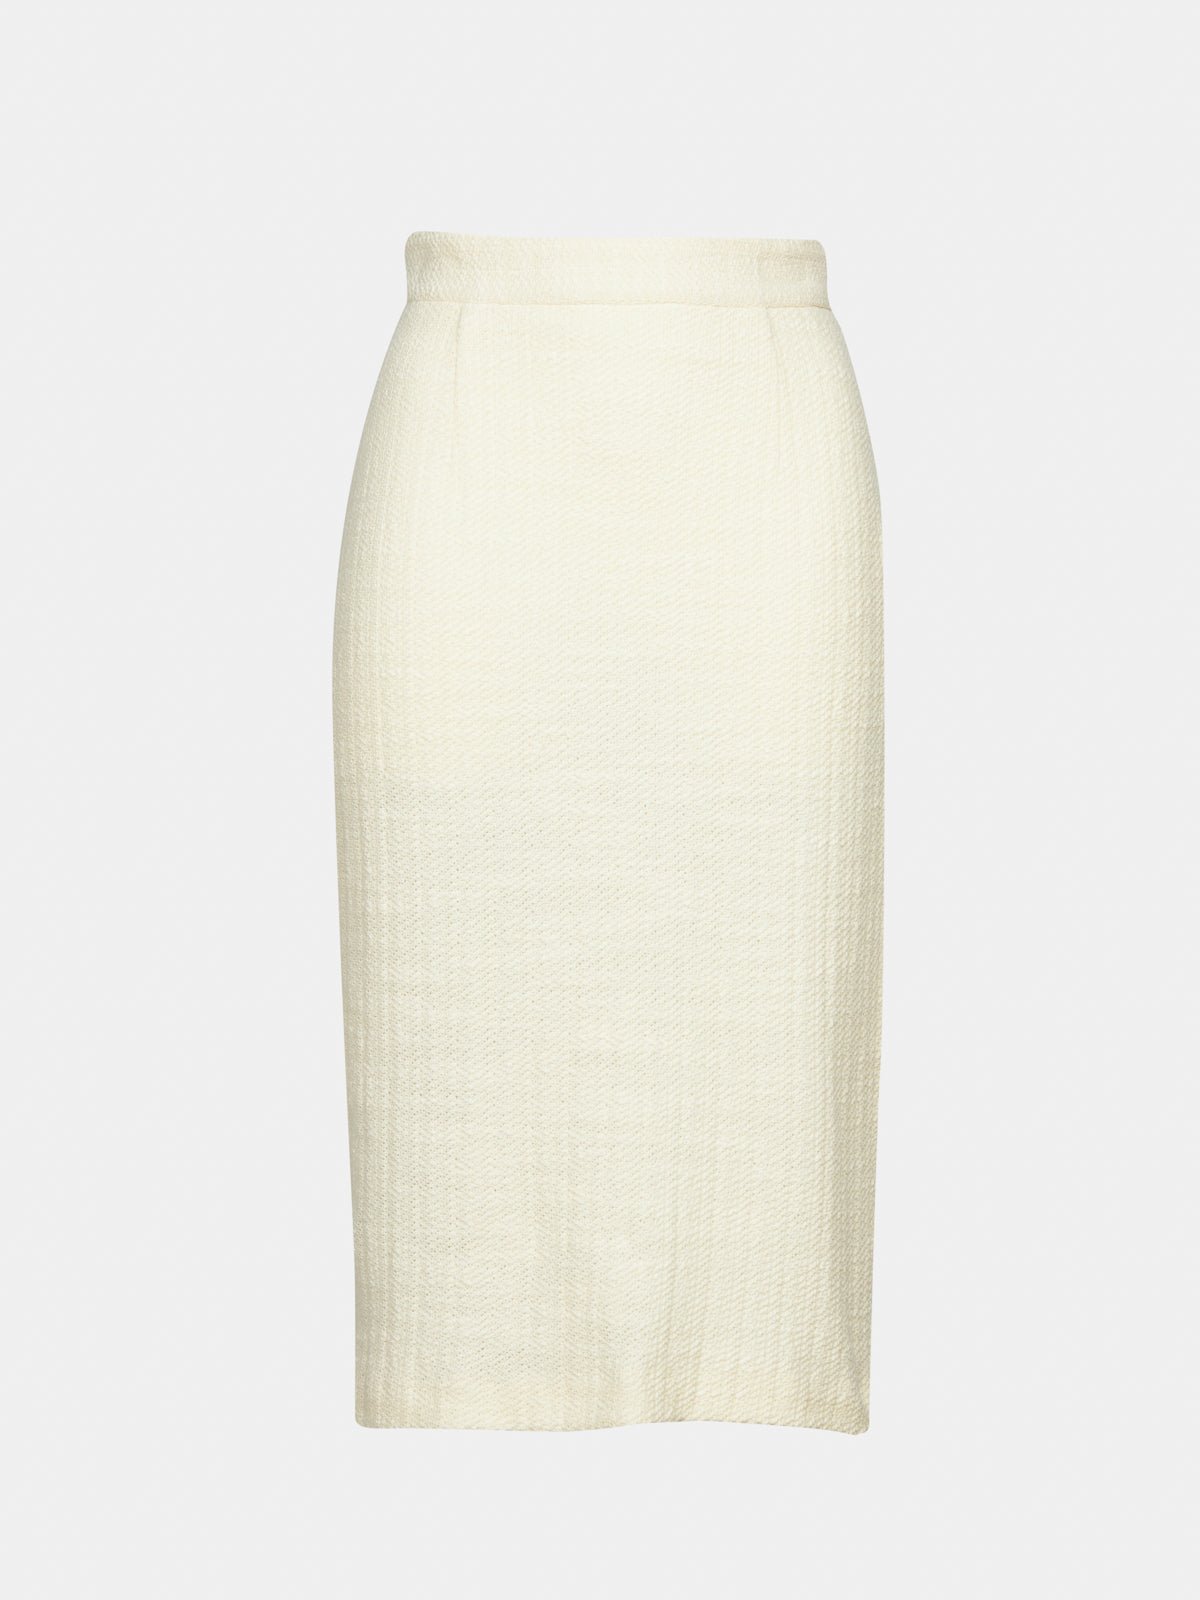 Longuette skirt made of 100% cotton 🍃